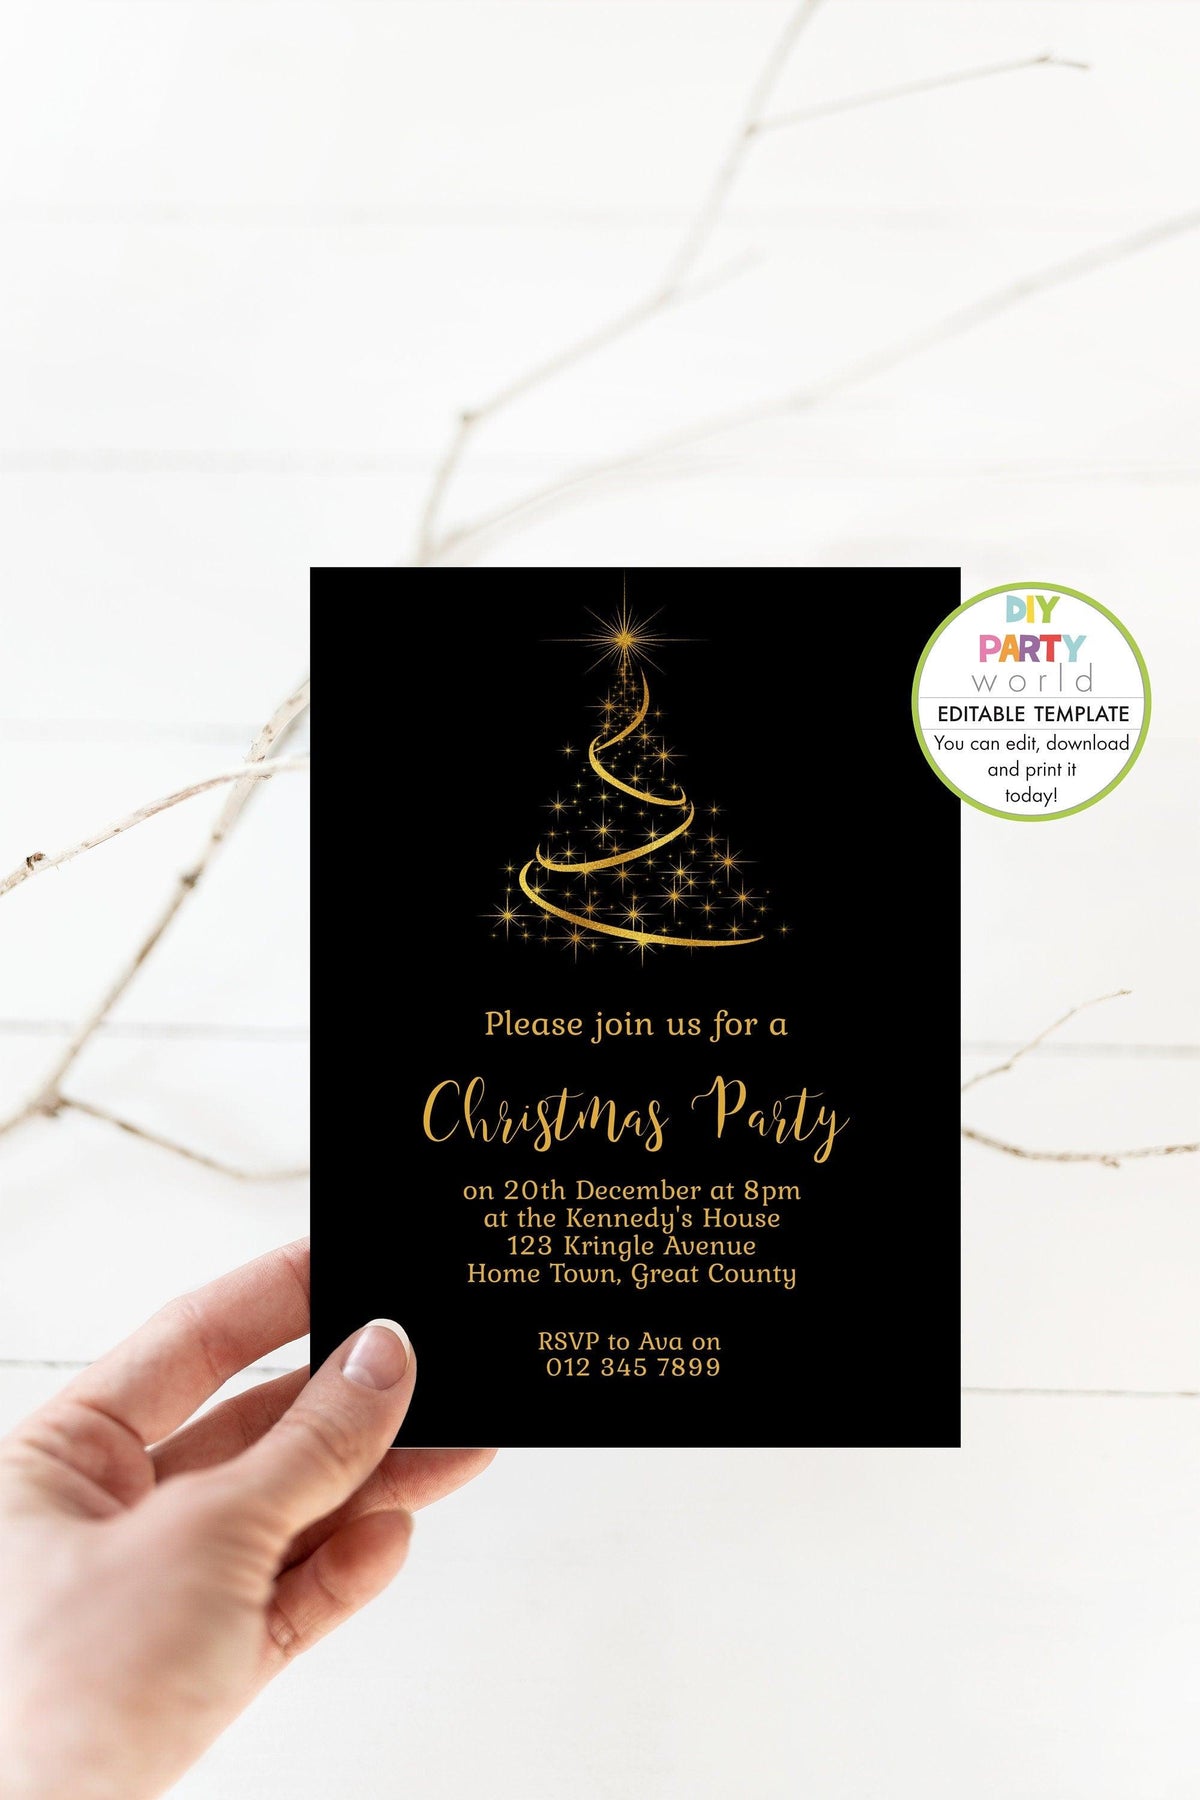 DIY Editable Christmas Tree Party Invitation C1016 – DIY Party World